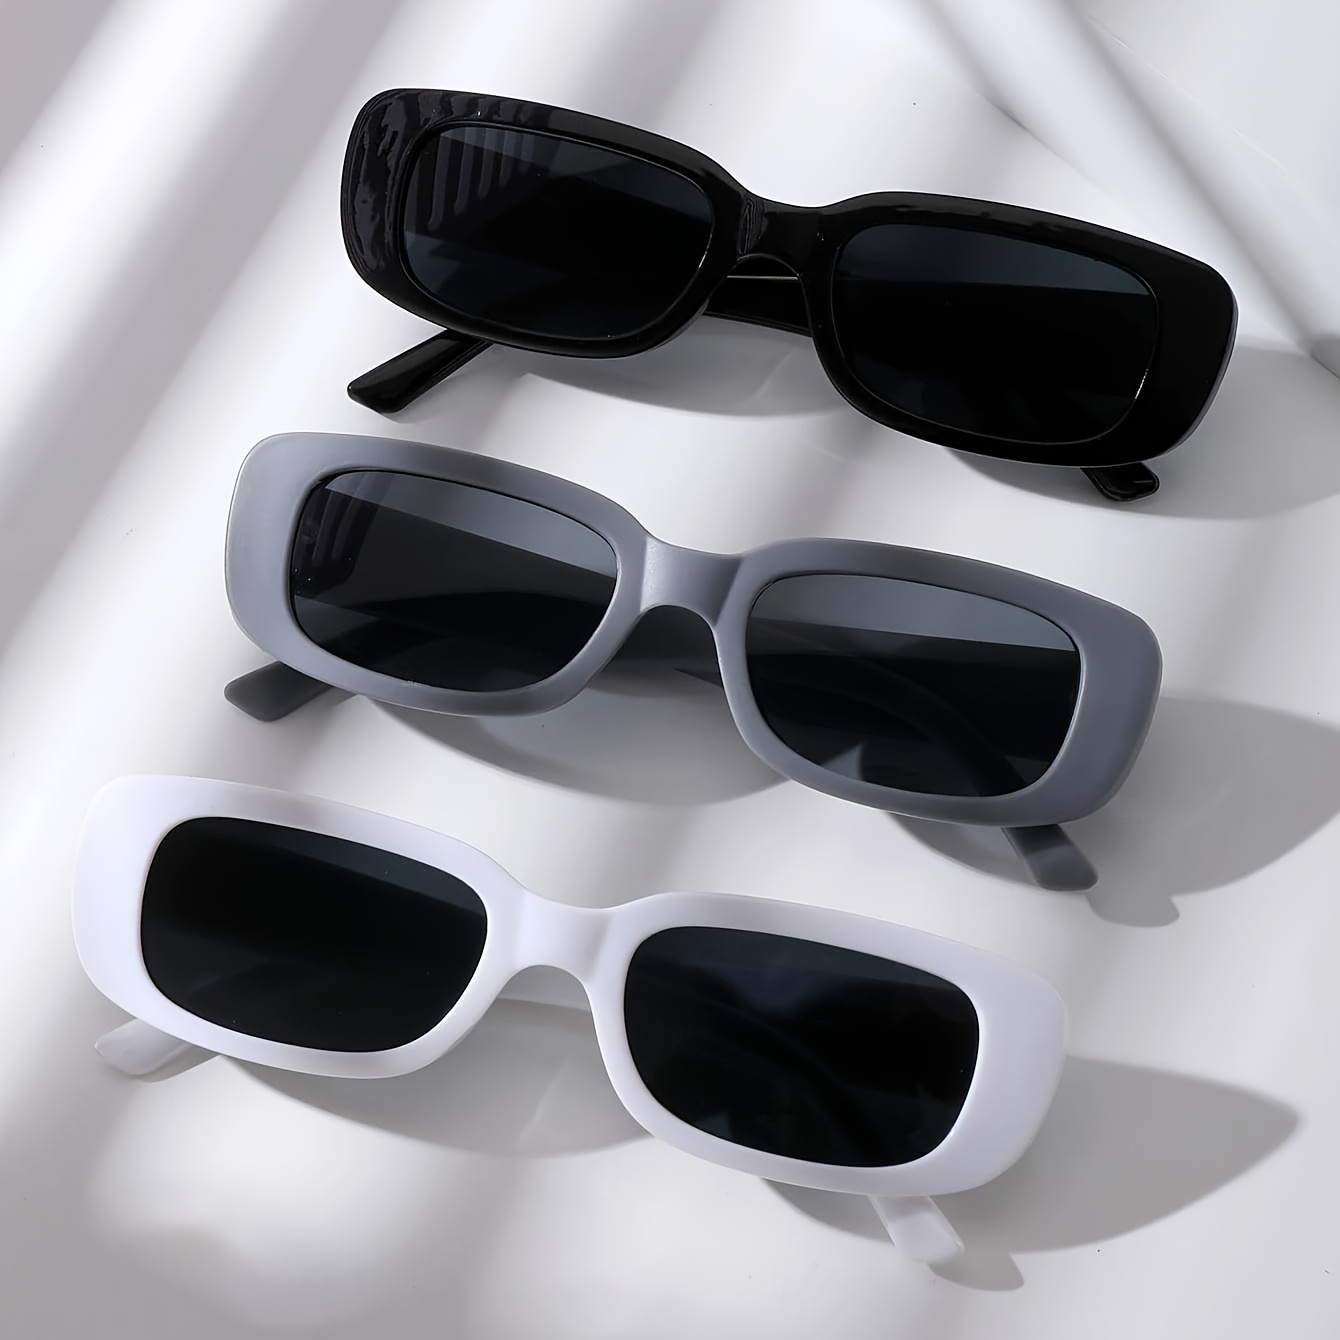 

3pcs Unisex Square Fashion Glasses, Retro Style Anti Glare Assorted Colors Trendy Eyewear For Men And Women